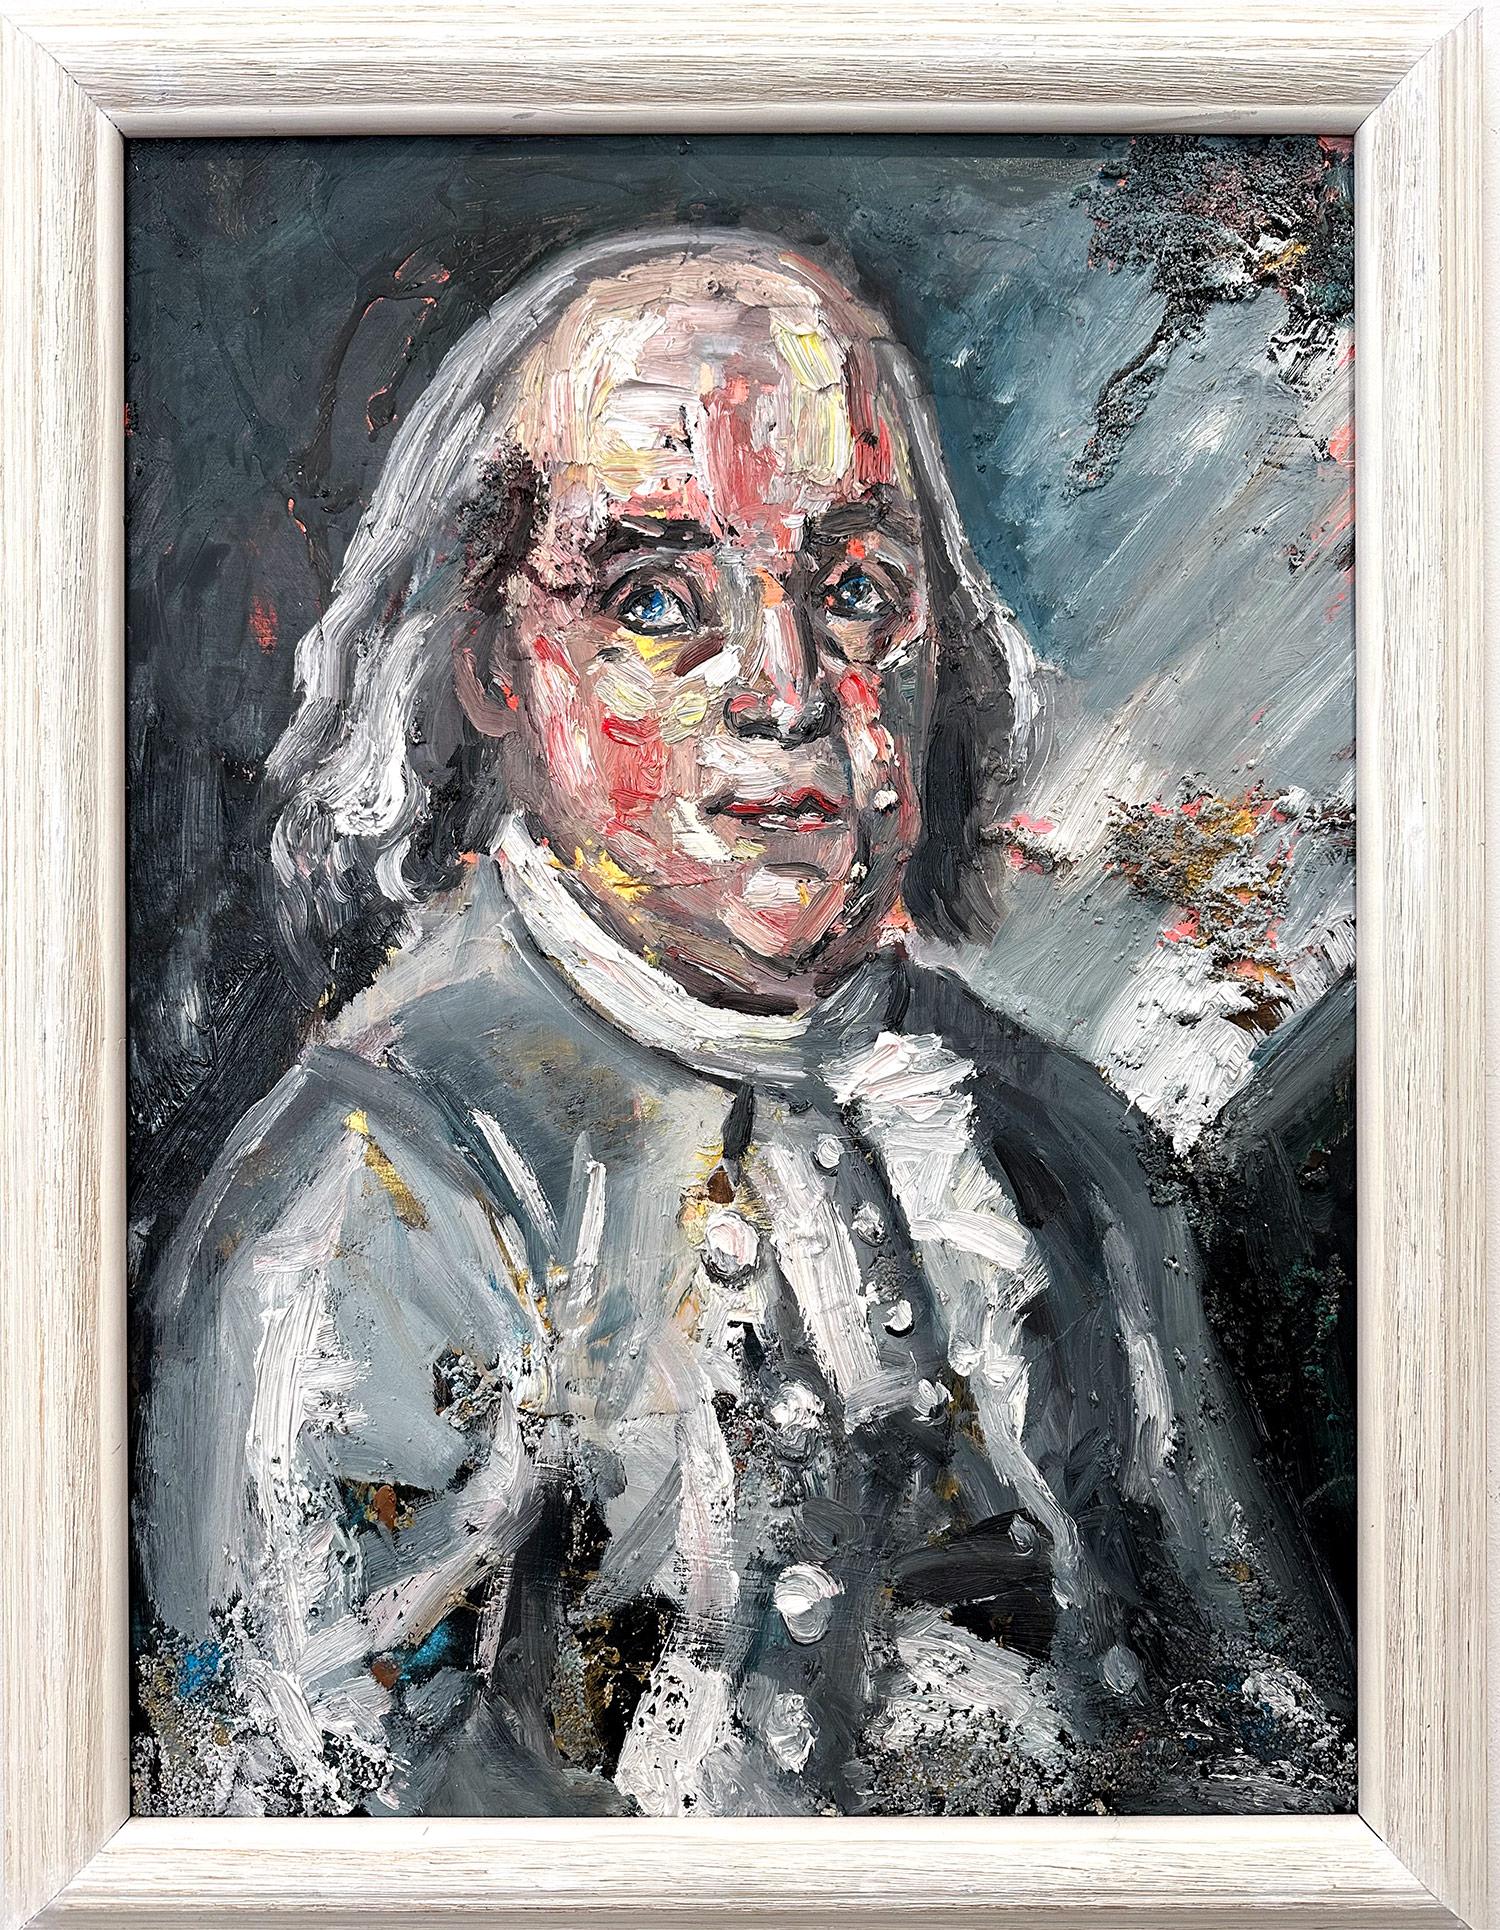 "Benjamin" Benjamin Franklin Peinture à l'huile impressionniste colorée et abstraite